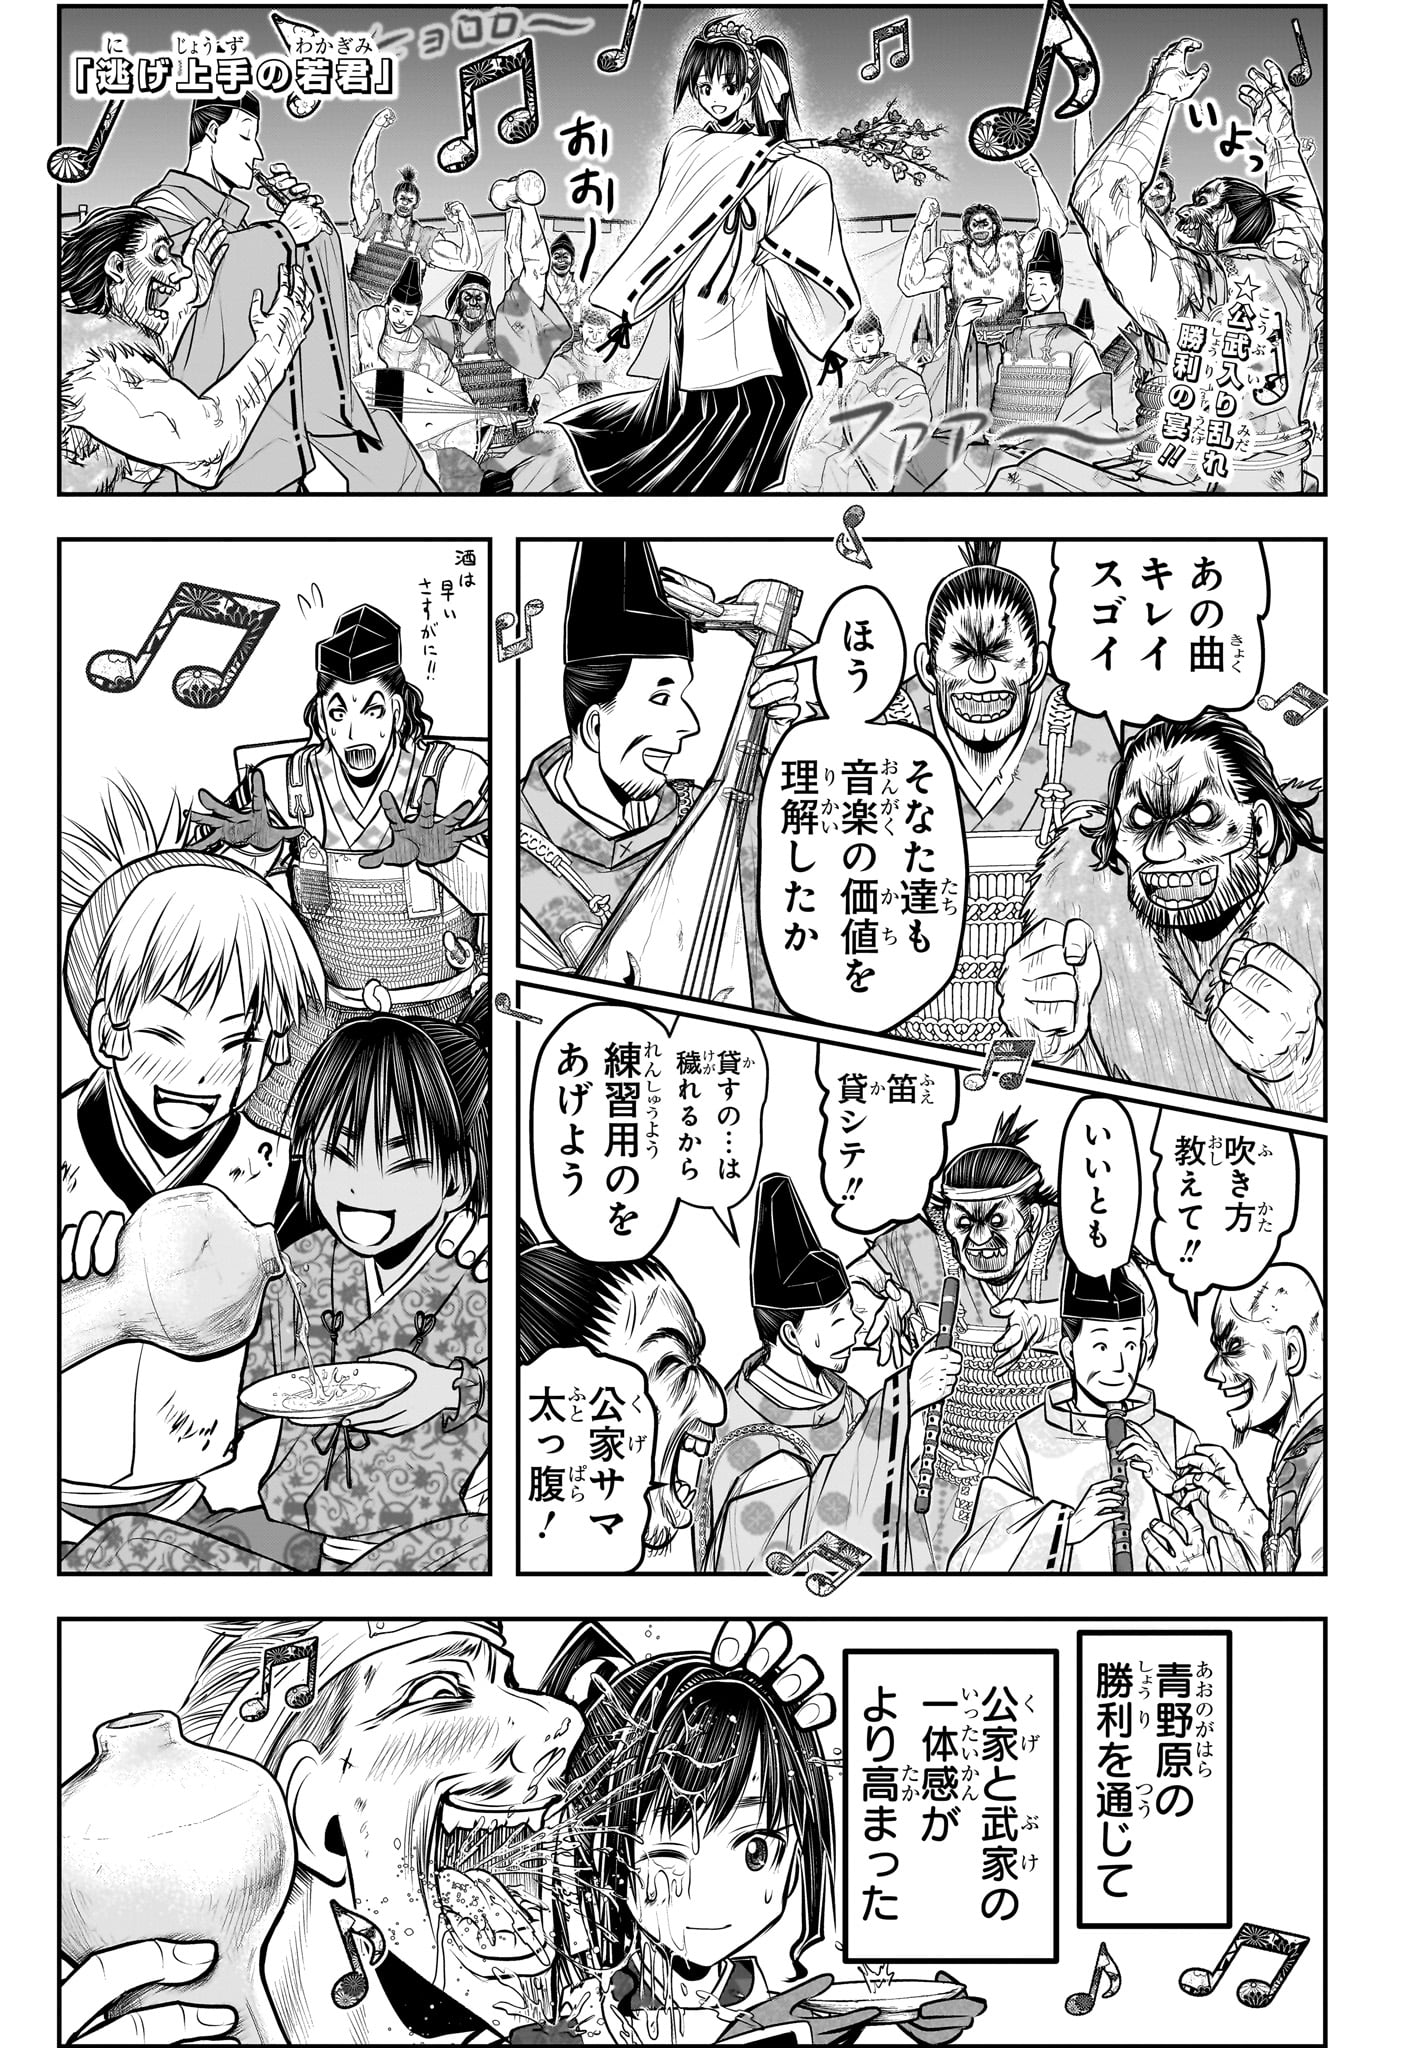 Nige Jouzu no Wakagimi - Chapter 146 - Page 1